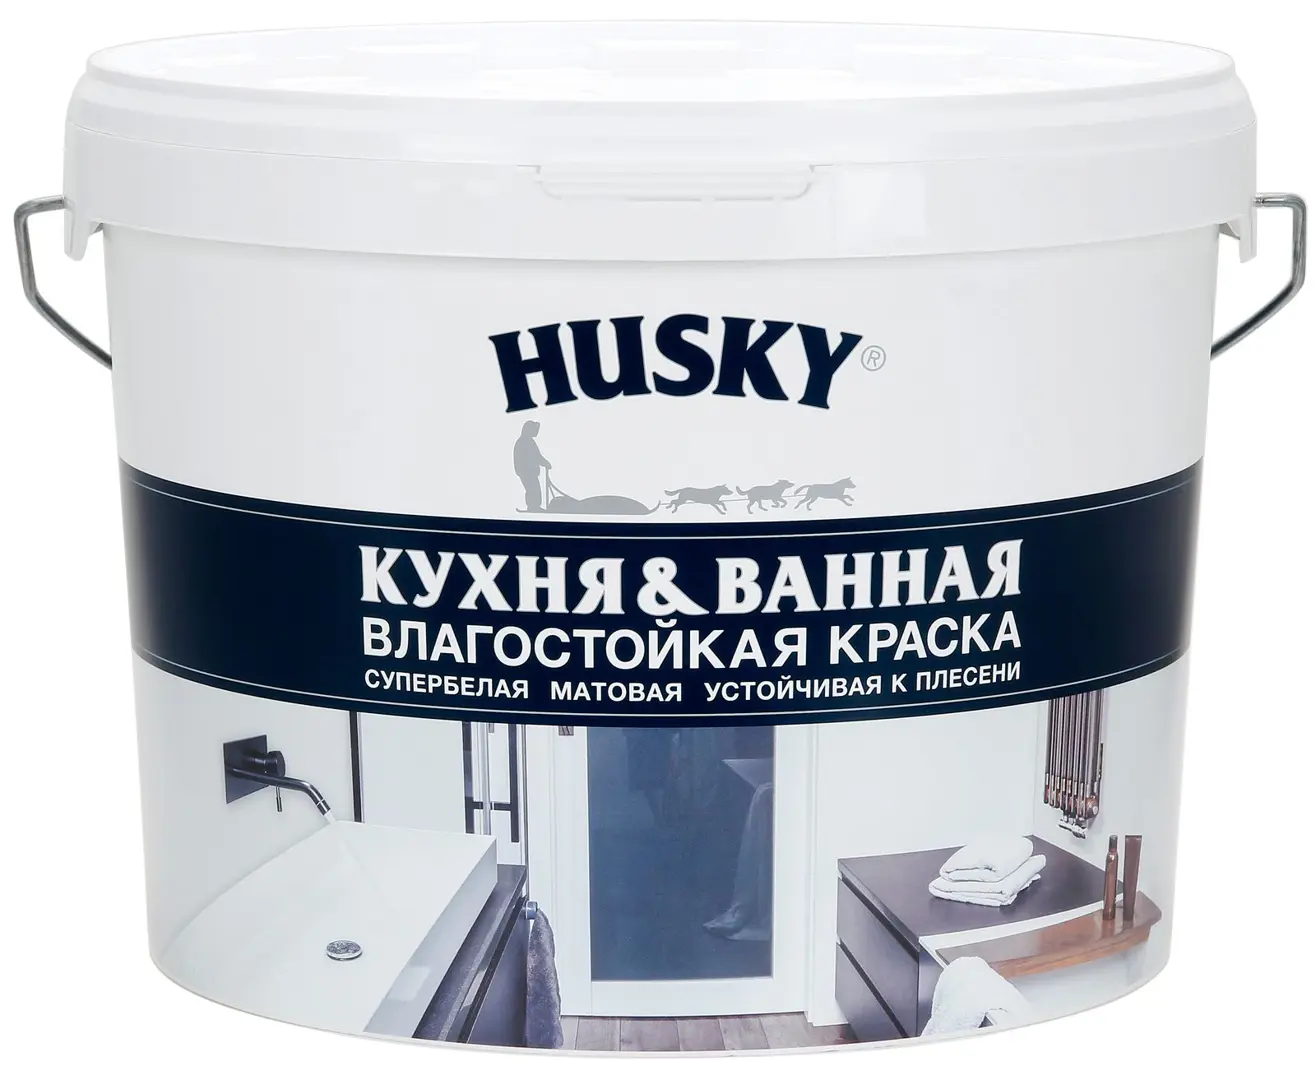 Краска для кухонь и ванных комнат Husky 9 л краска вд white house для кухонь и ванн моющаяся супербелая 7 кг